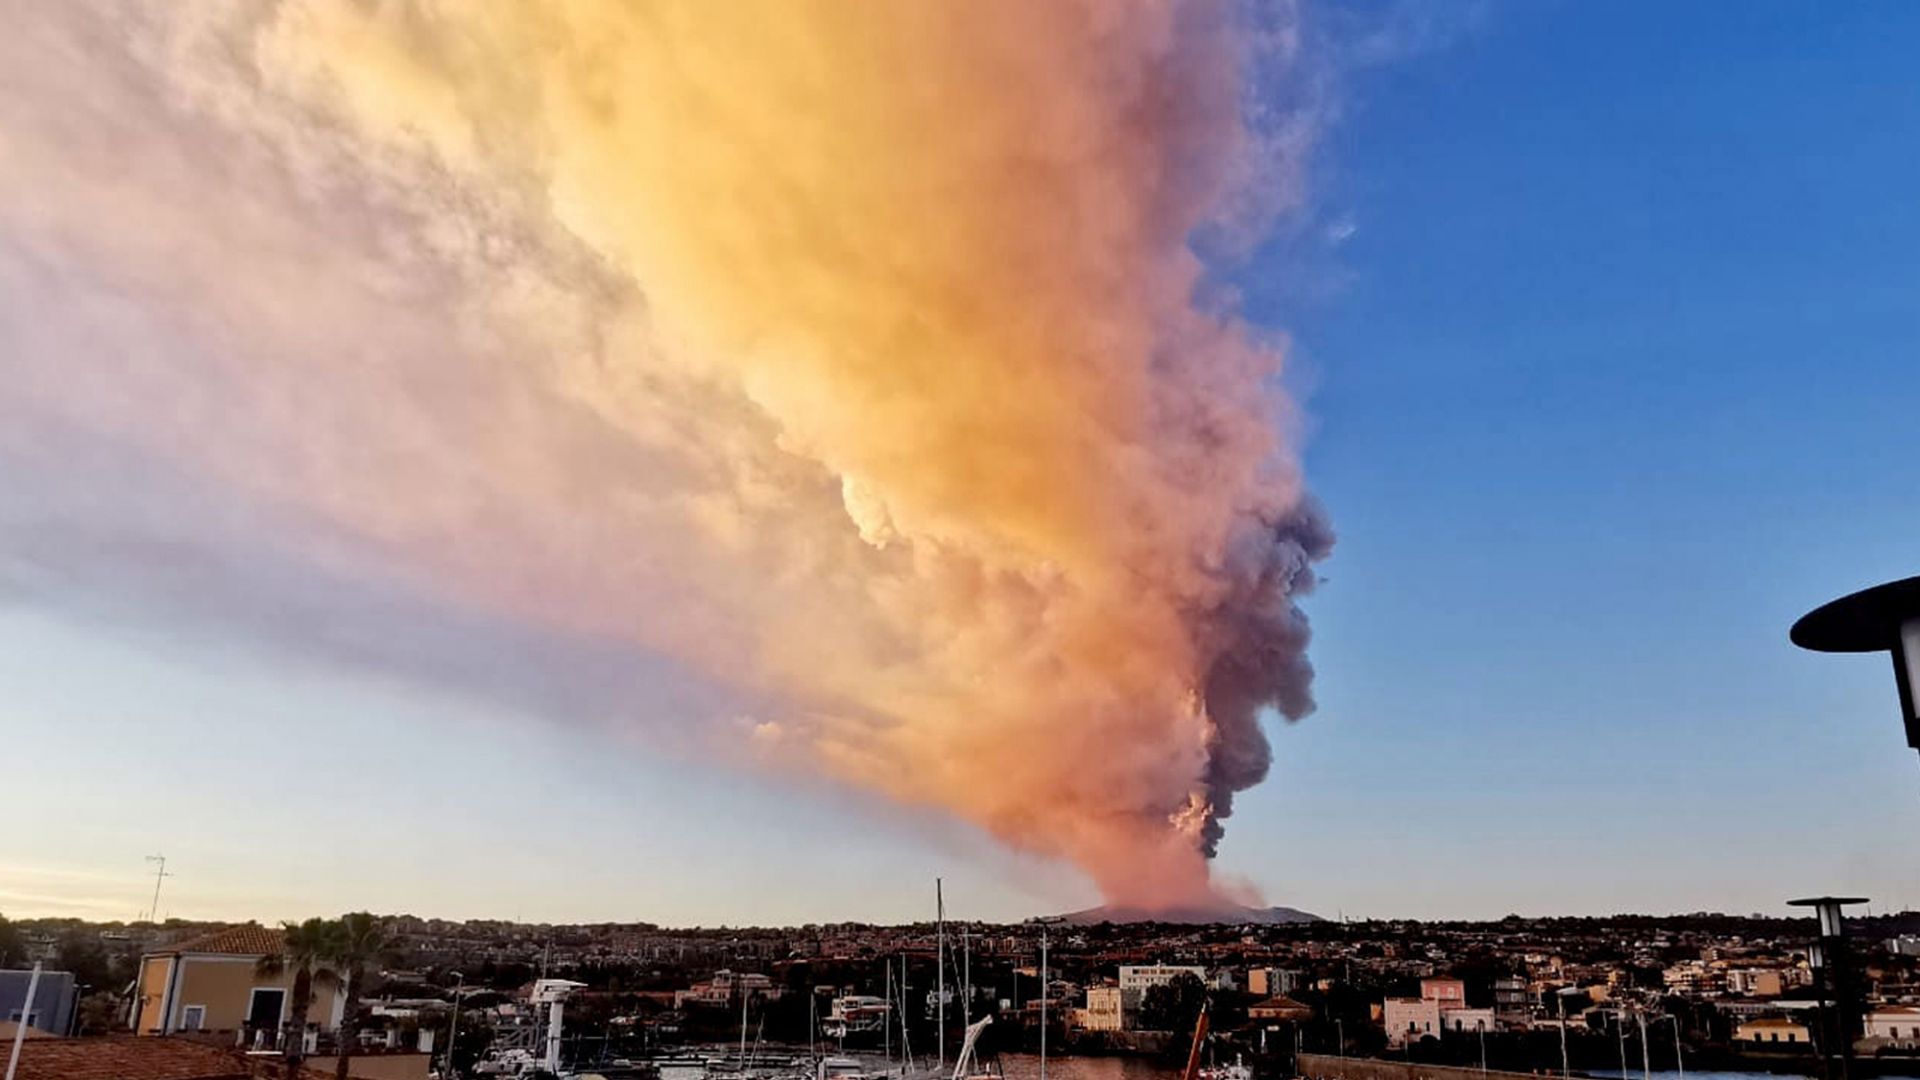 Два италиански вулкана изригнаха едновременно - Етна и Стромболи (видео)